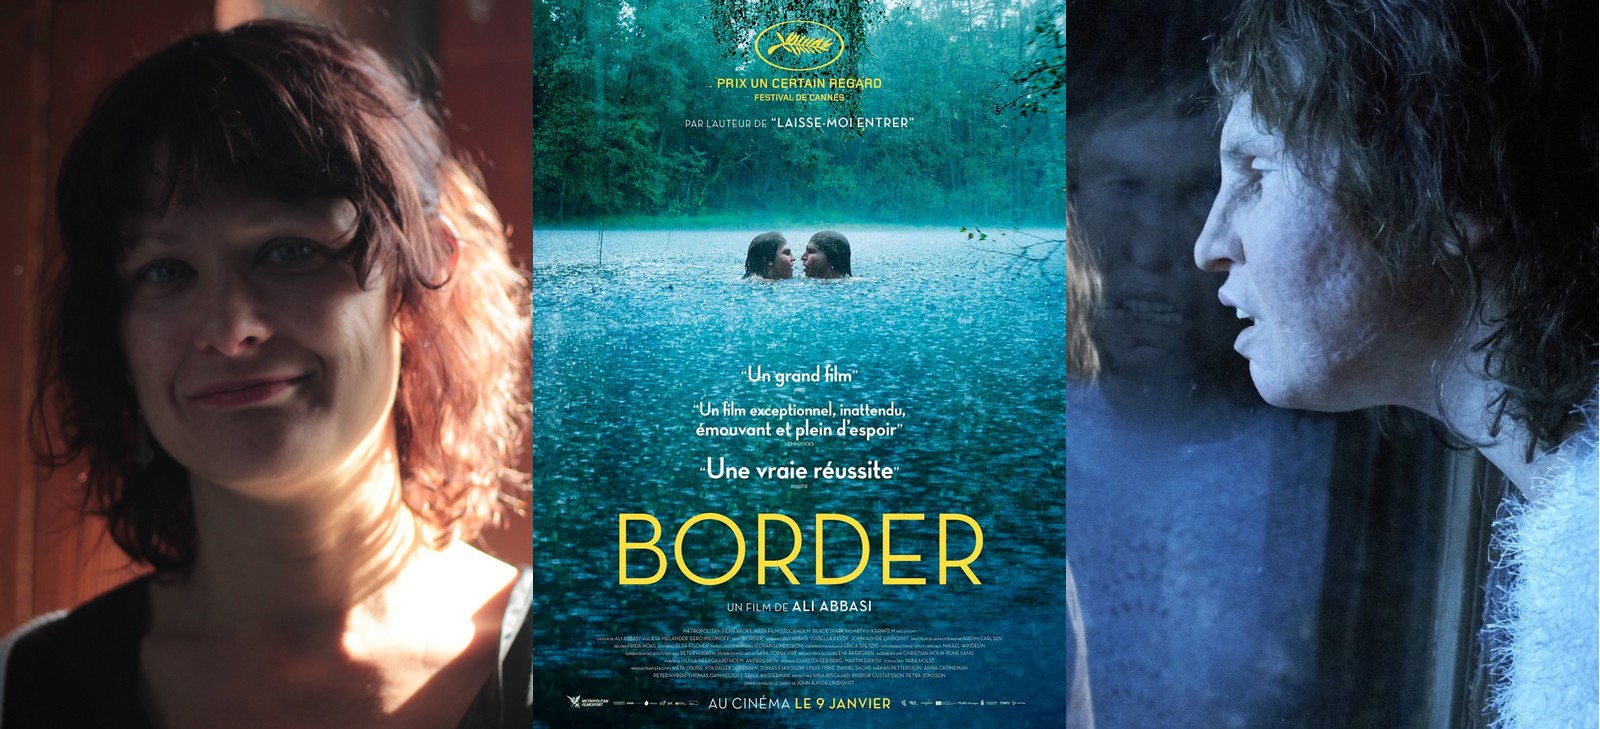 La Suédoise Isabella Eklöff, co-scénariste du conte fantastique Border (Gräns), Prix Un Certain Regard à Cannes en 2018, en salles le 9 janvier 2019